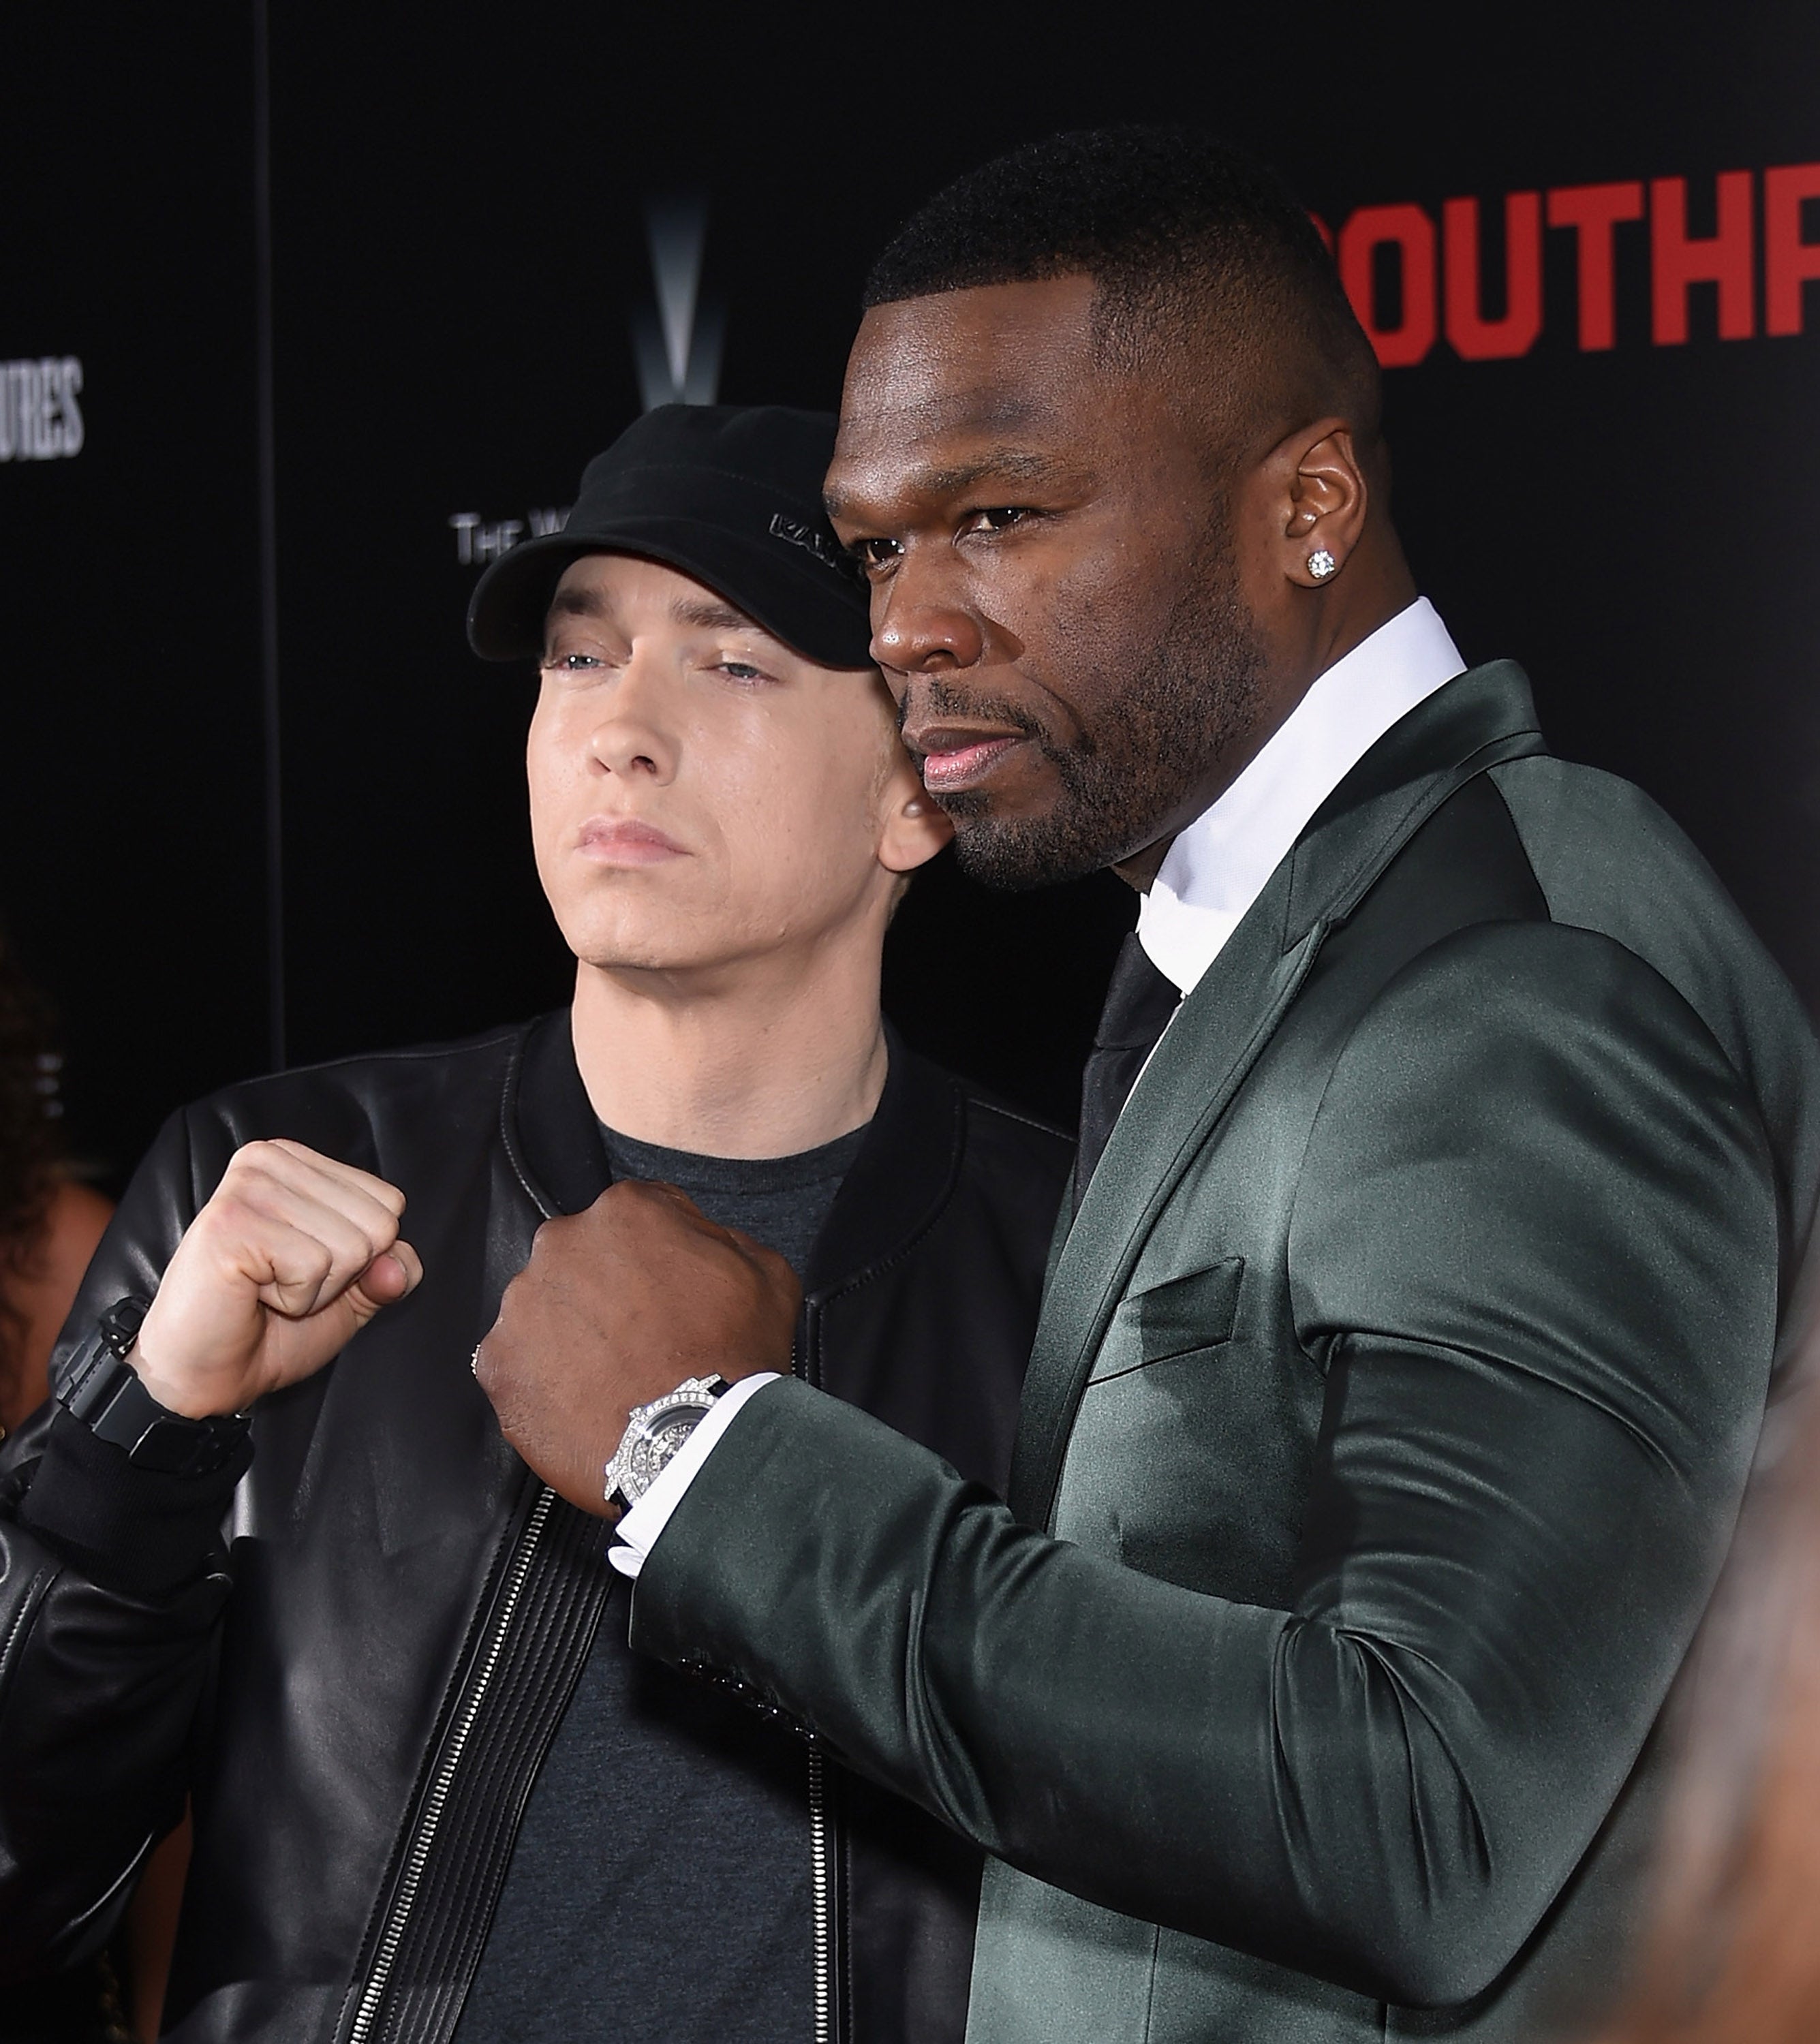 Eminem and 50 Cent